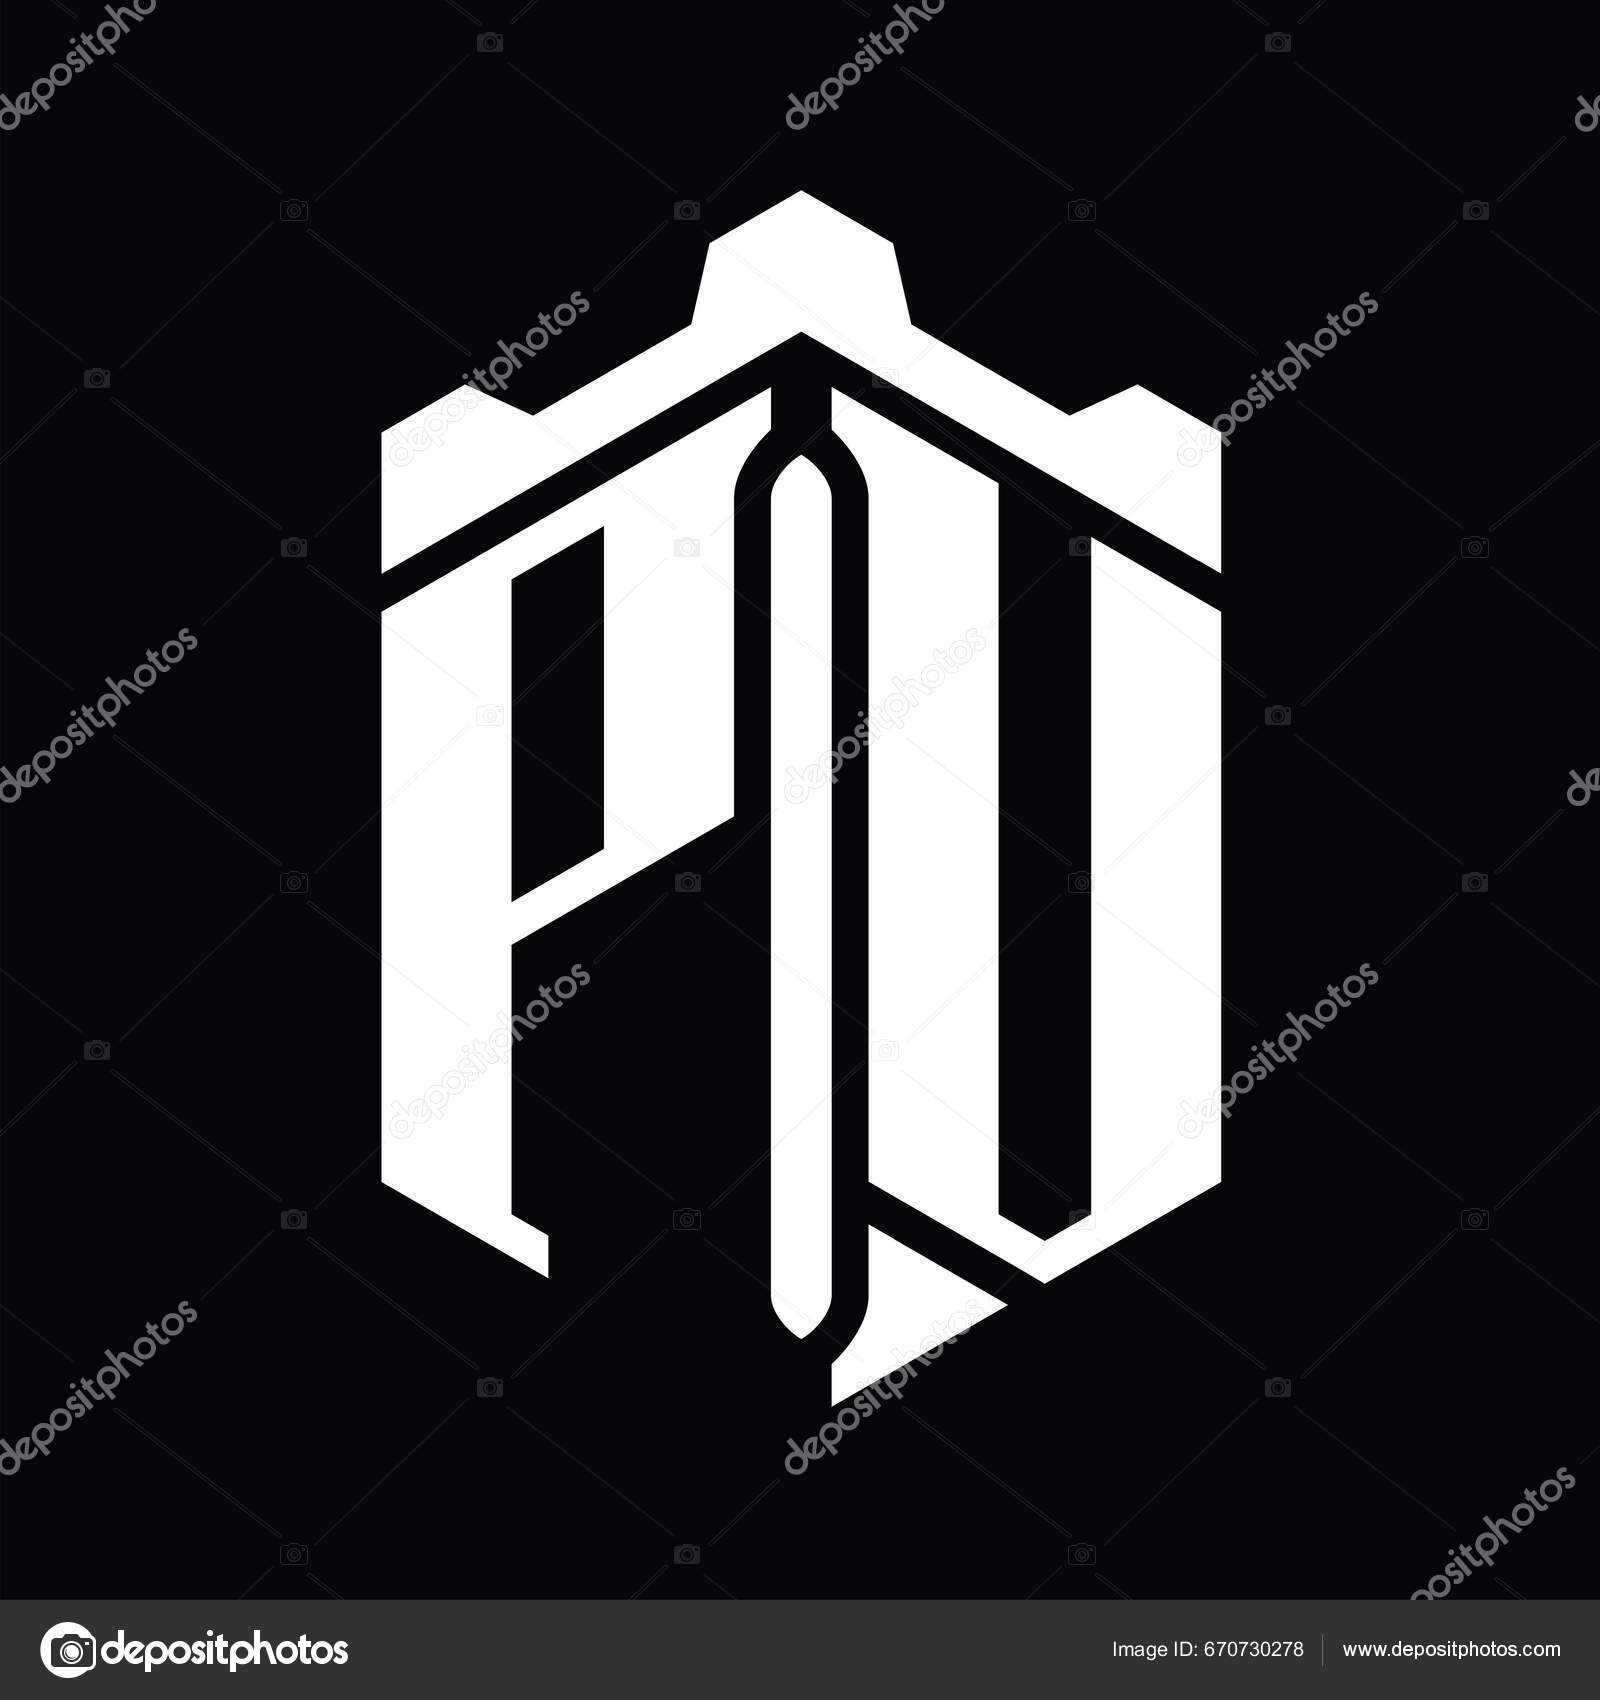 PM Logo monogram gaming with hexagon geometric shape design